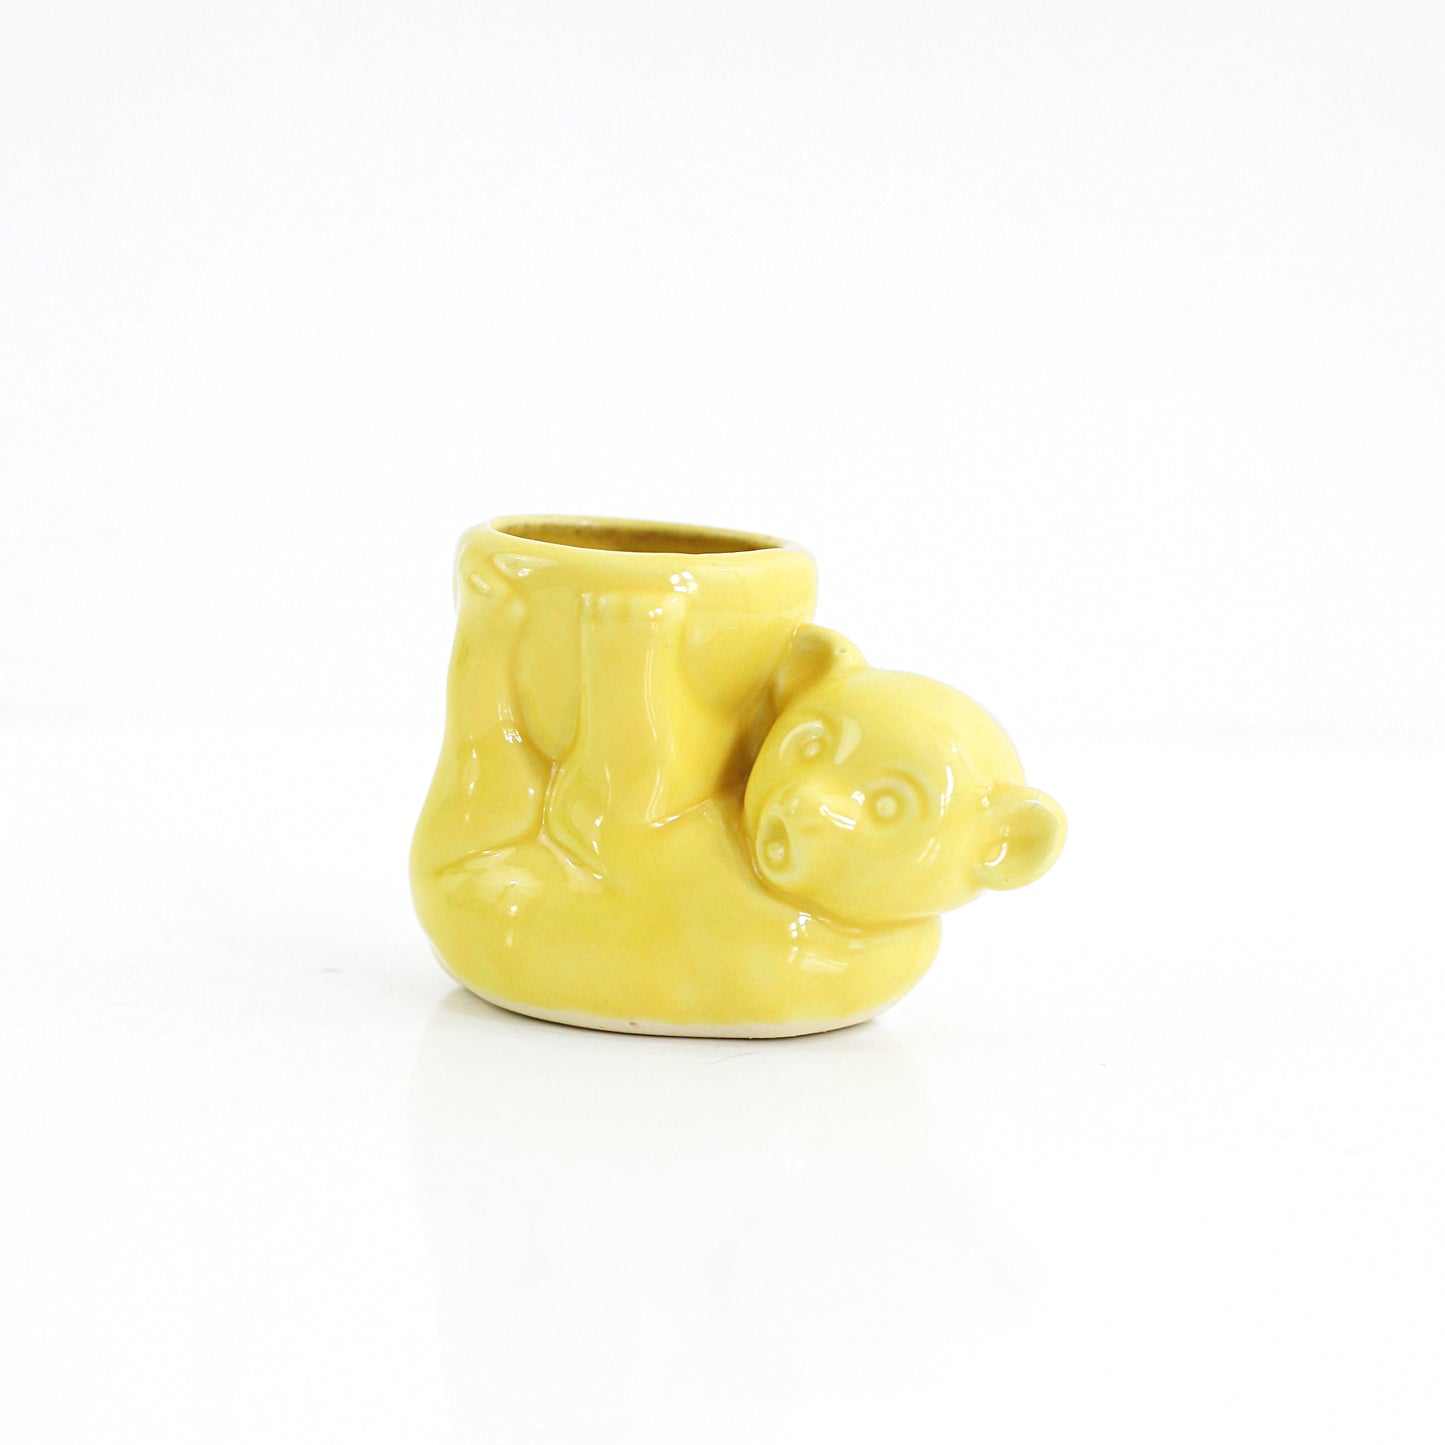 SOLD - 1940s Morton Pottery Yellow Bear Planter